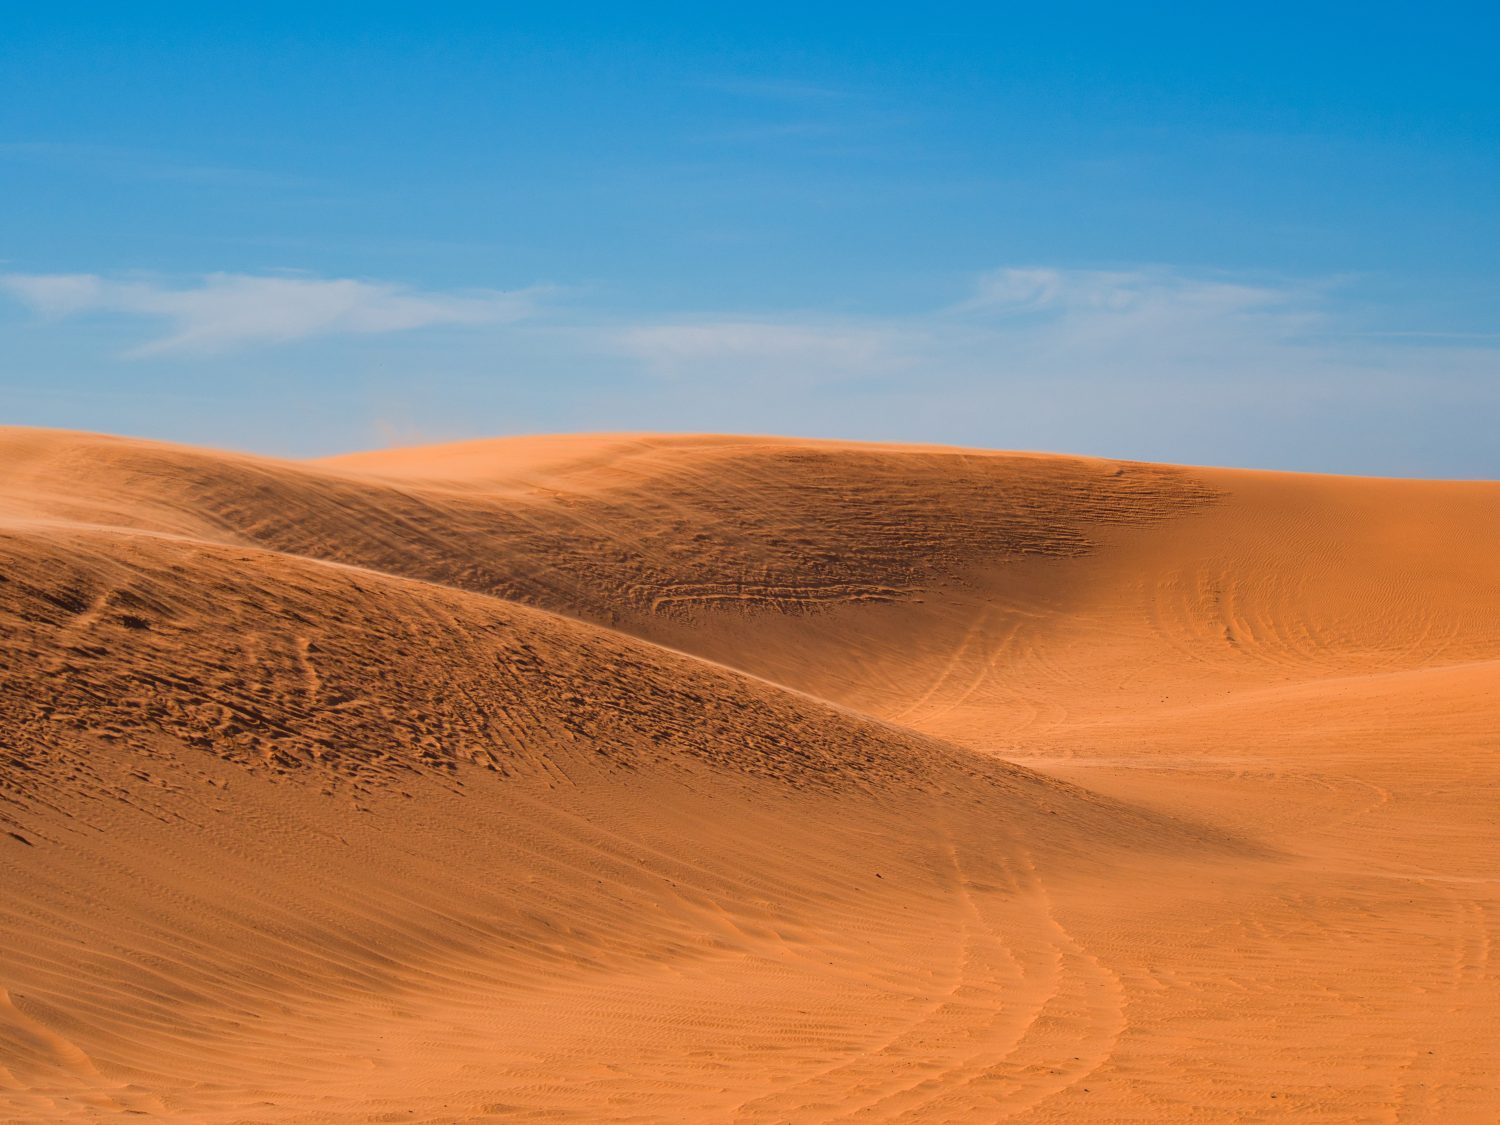 Sand Dunes in Little Sahara State Park in Waynoka, USA